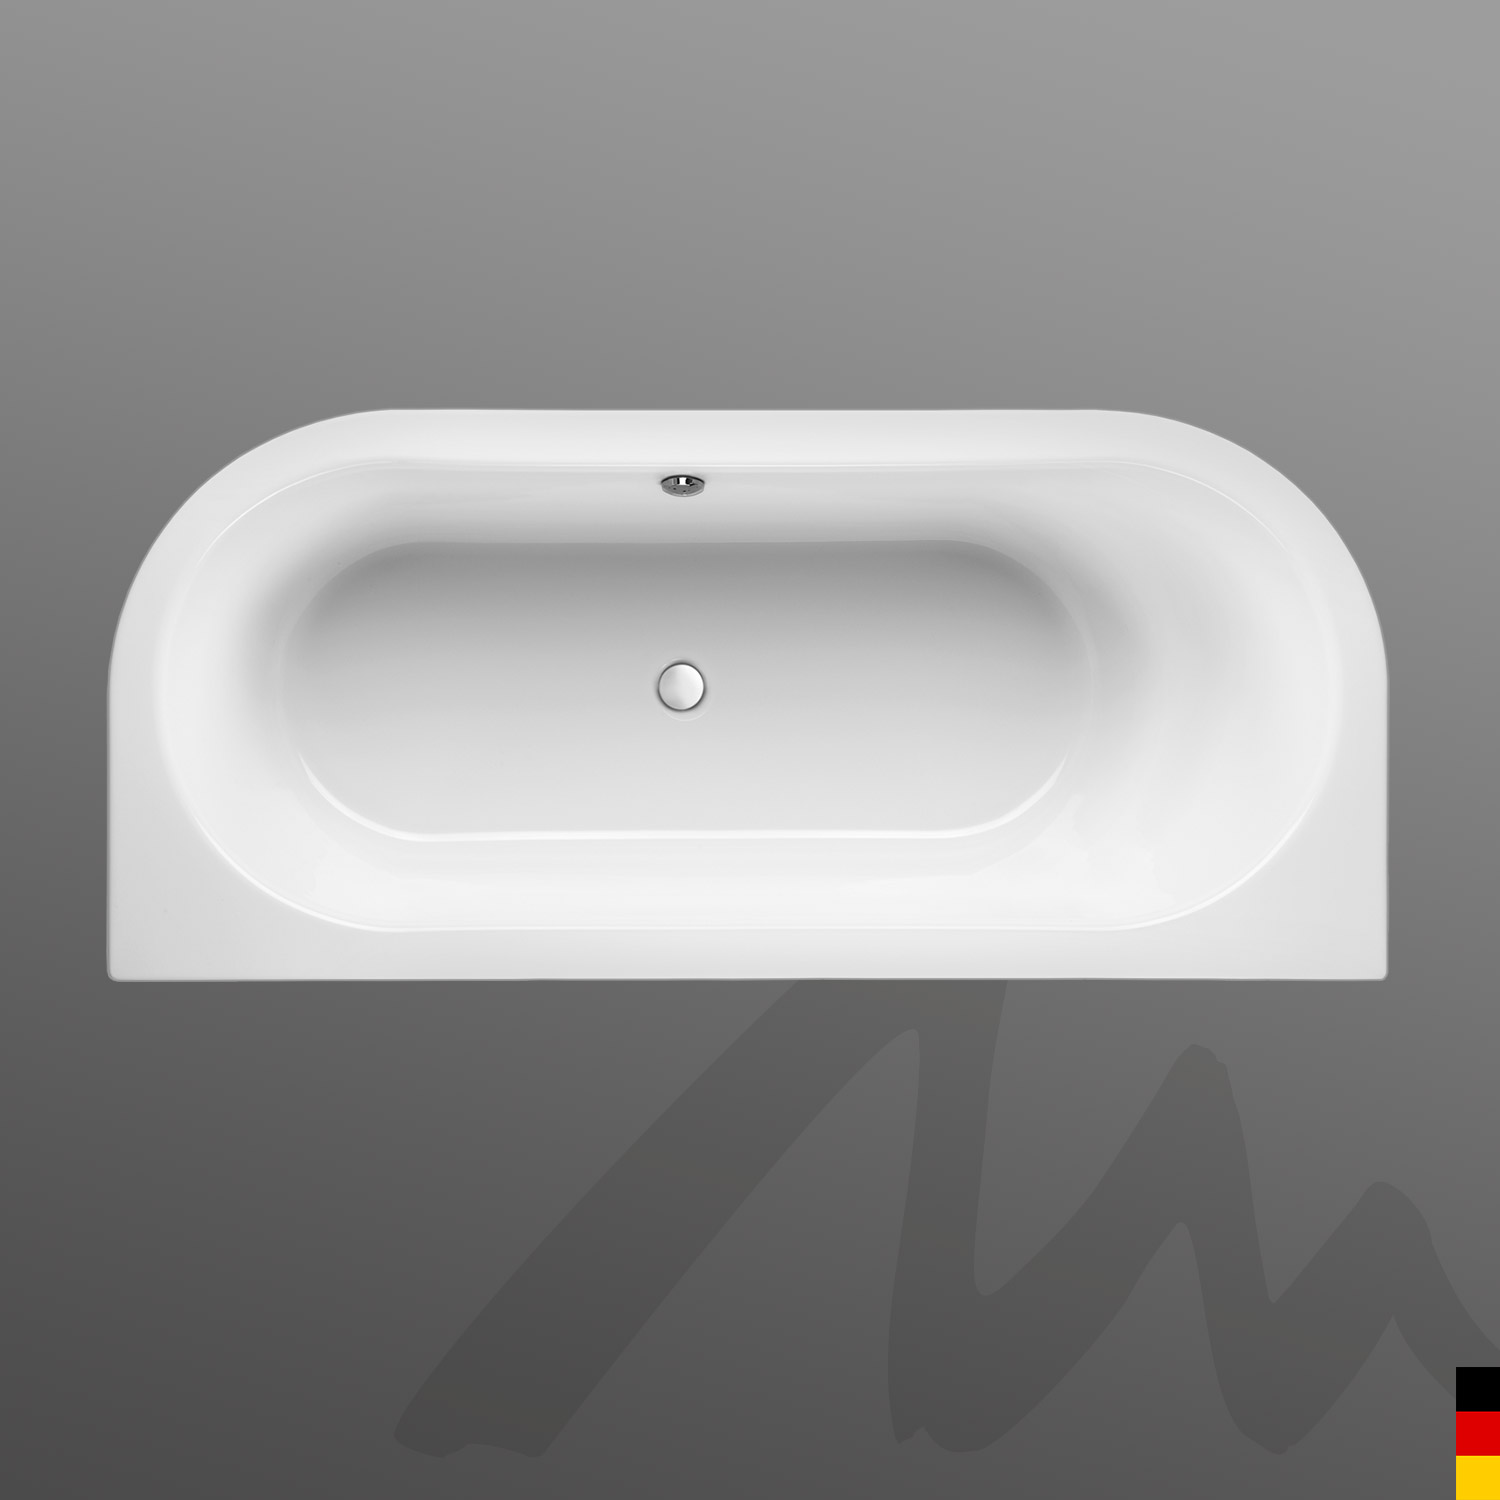 Mauersberger Badewanne Oval Primo 2 - 180/80 uno  180x80x45  Farbe: weiß